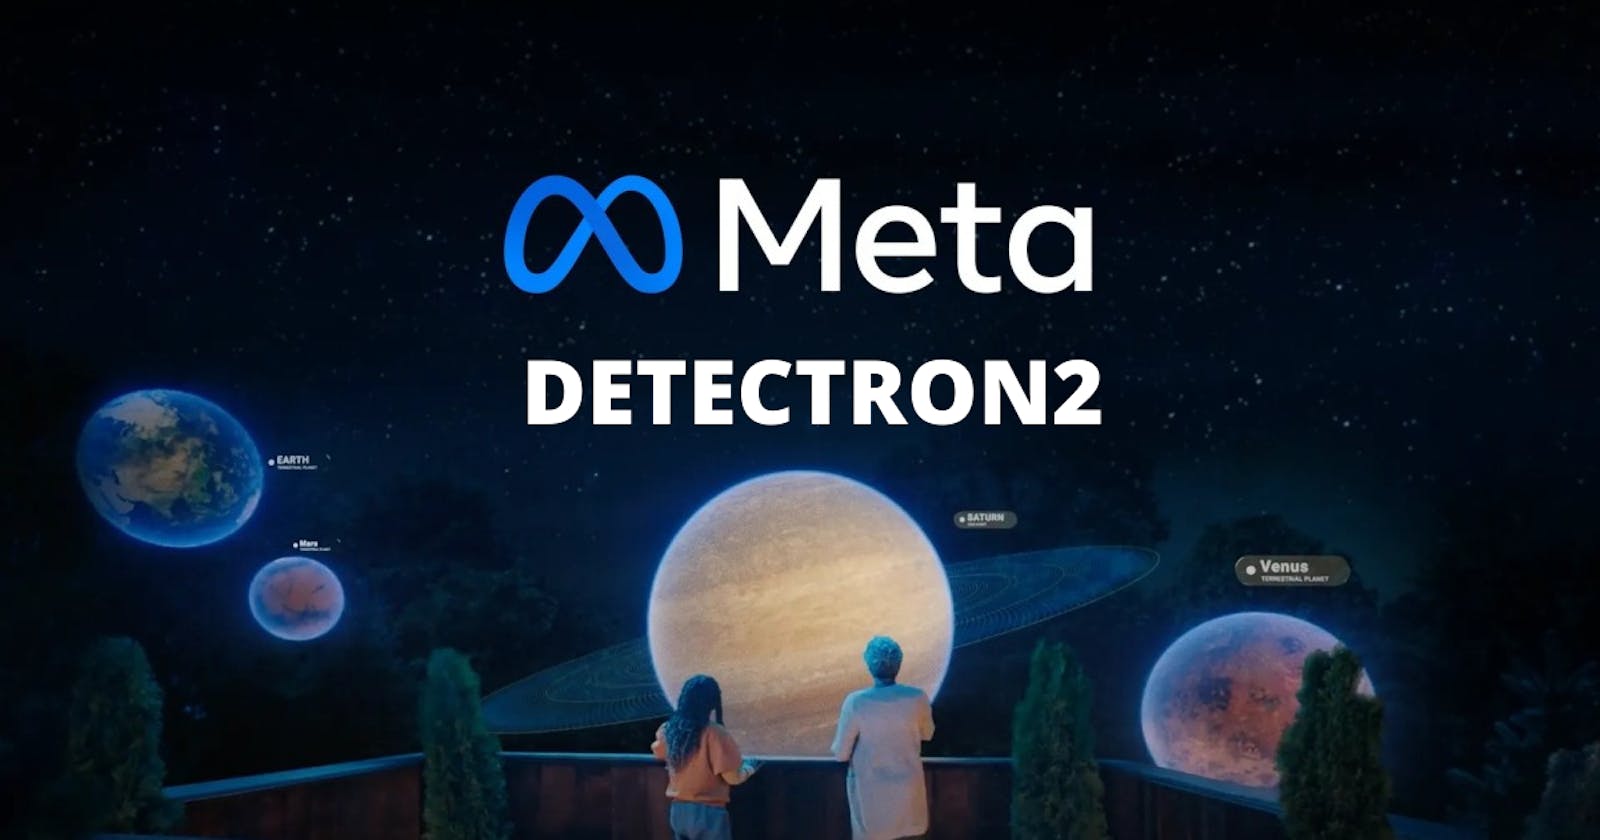 Object Detection and Segmentation using Meta's Detectron2